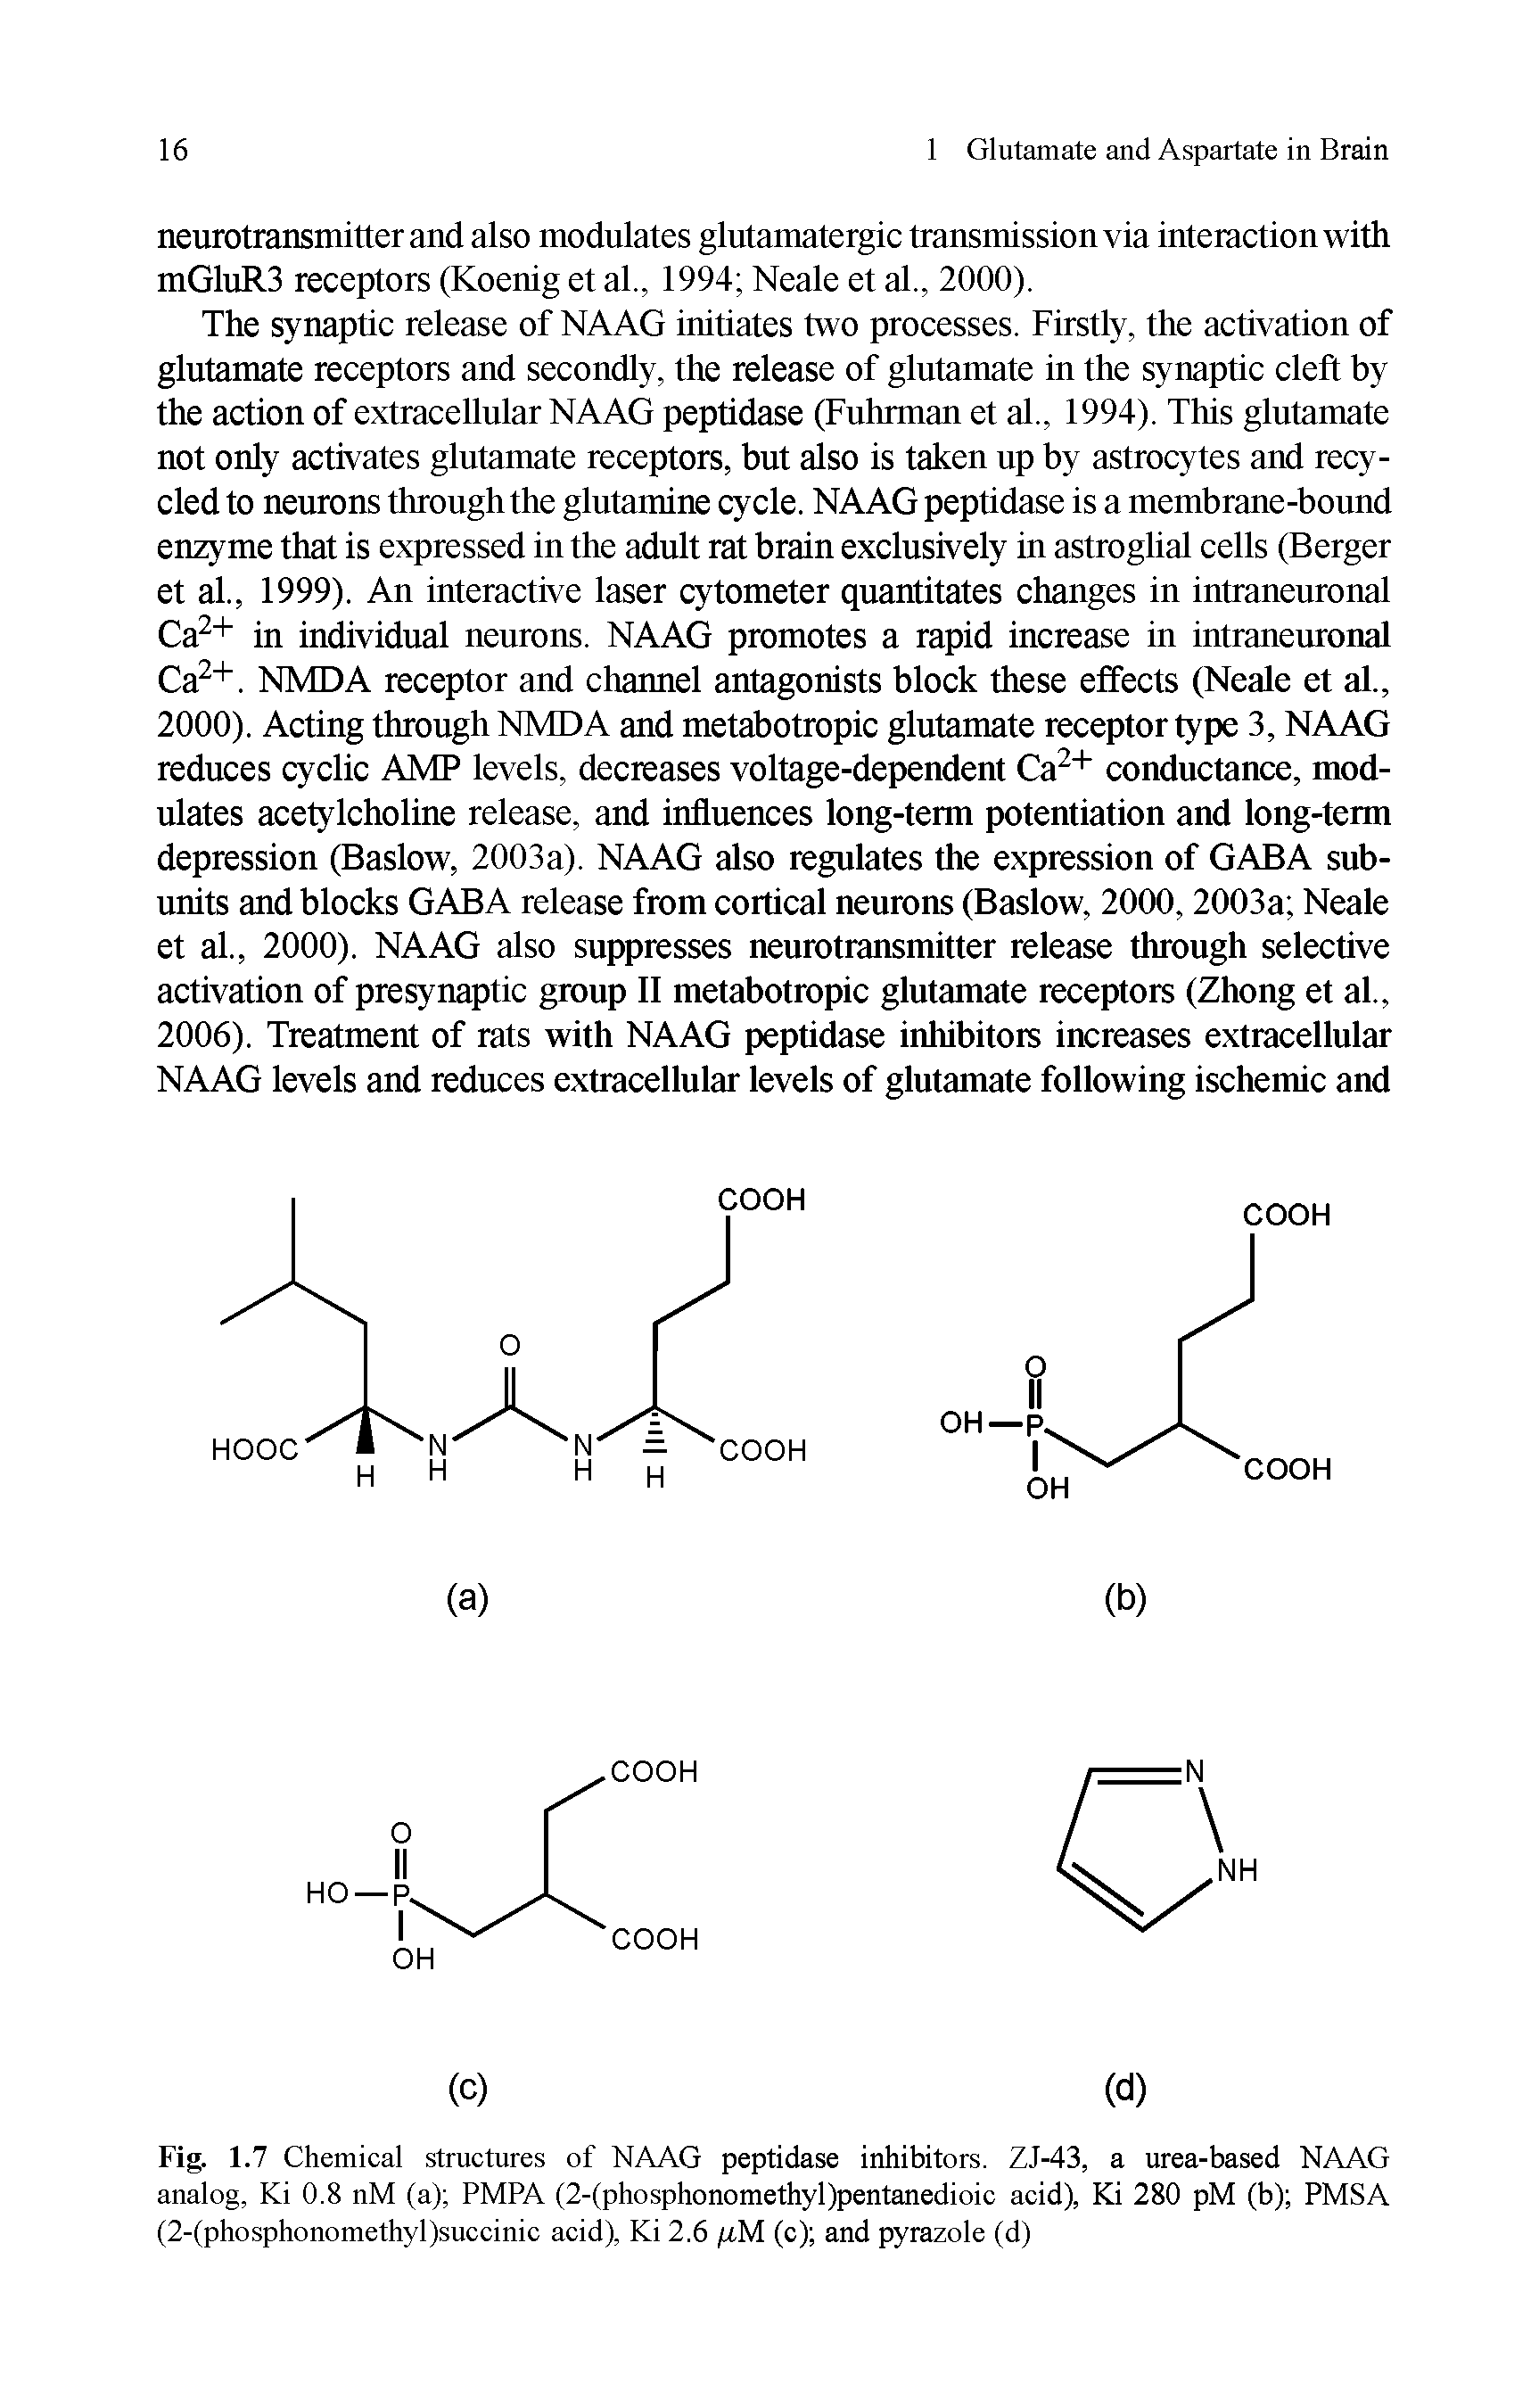 Fig. 1.7 Chemical structures of NAAG peptidase inhibitors. ZJ-43, a urea-based NAAG analog, Ki 0.8 nM (a) PMPA (2-(phosphonomethyl)pentanedioic acid), Ki 280 pM (b) PMSA (2-(phosphonomethyl)succinic acid), Ki 2.6 /itM (c) and pyrazole (d)...